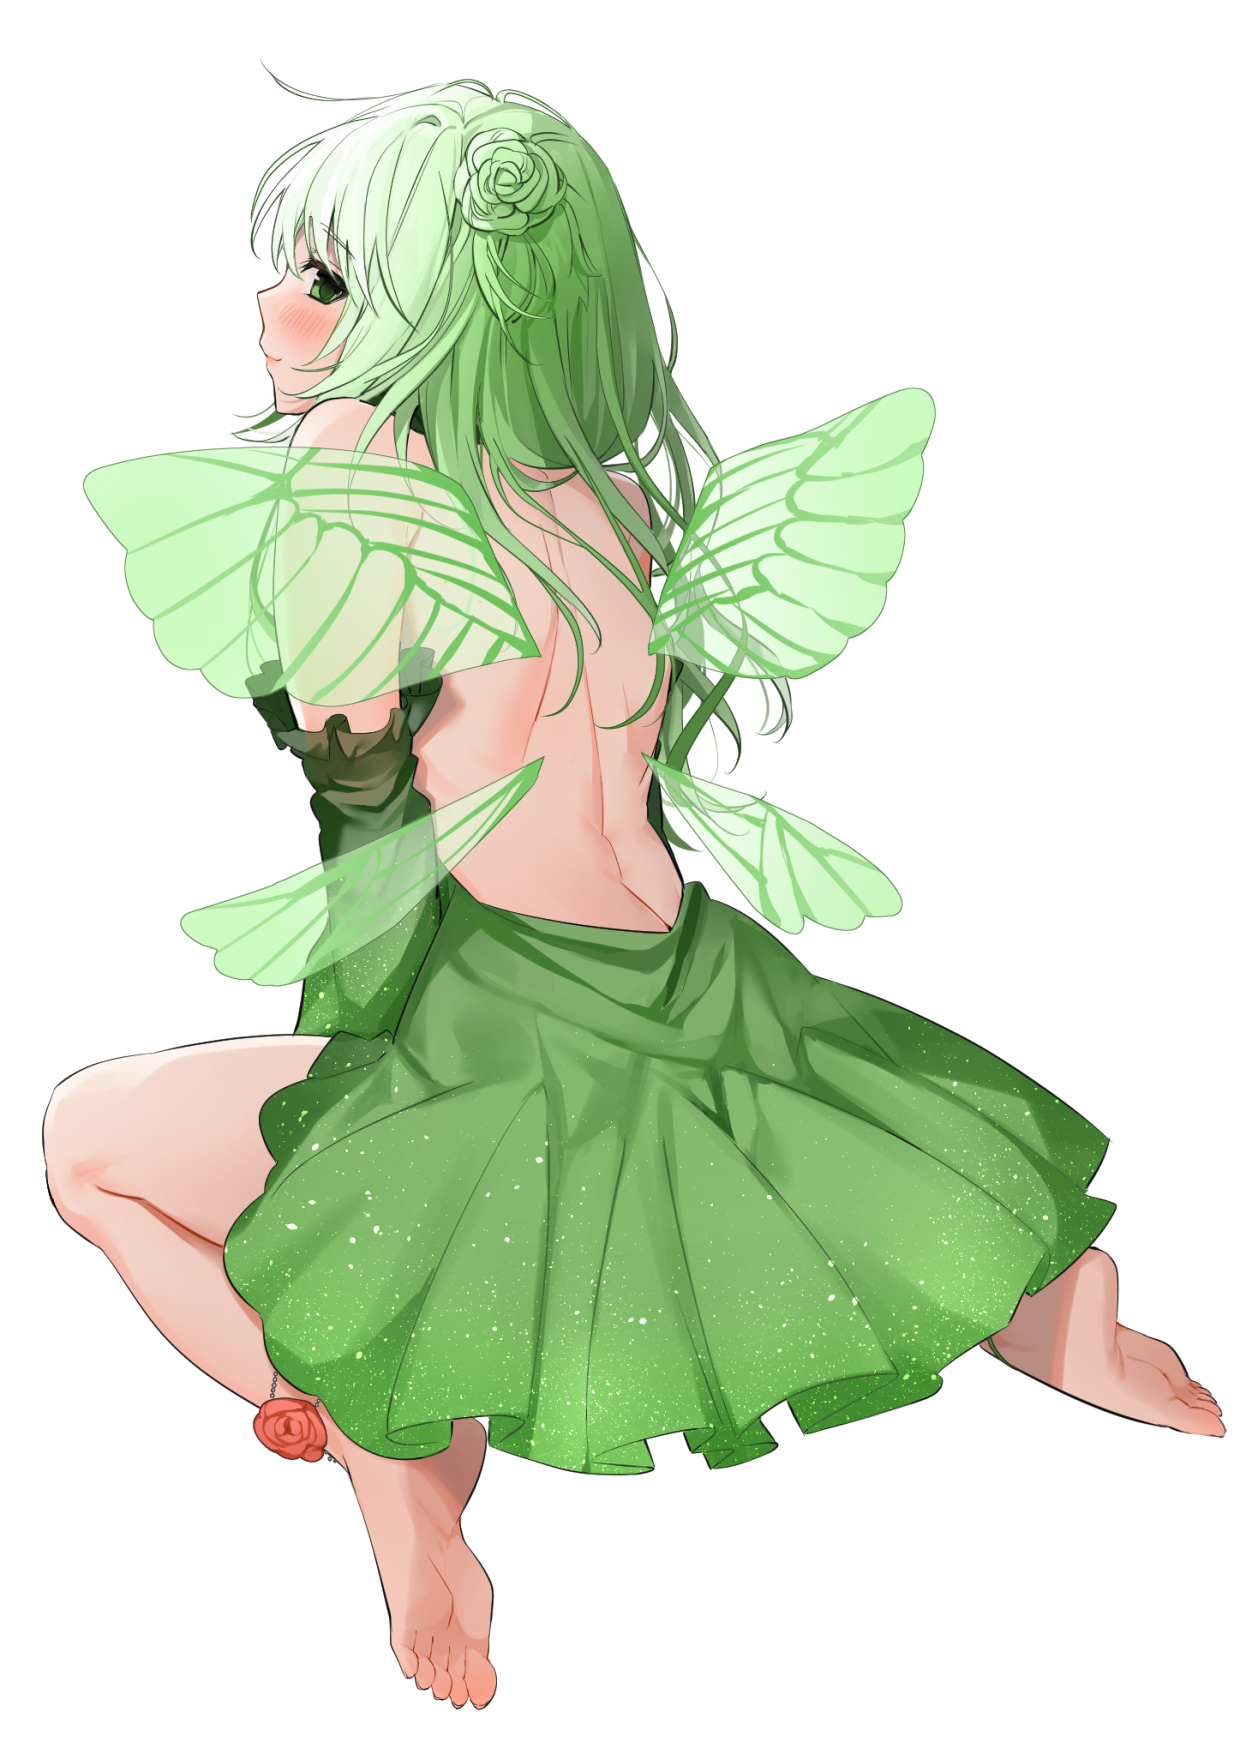 Anime 1240x1748 anime anime girls digital art artwork 2D portrait display fairies green hair green eyes dress bareback barefoot feet kneeling wings Virtual Youtuber